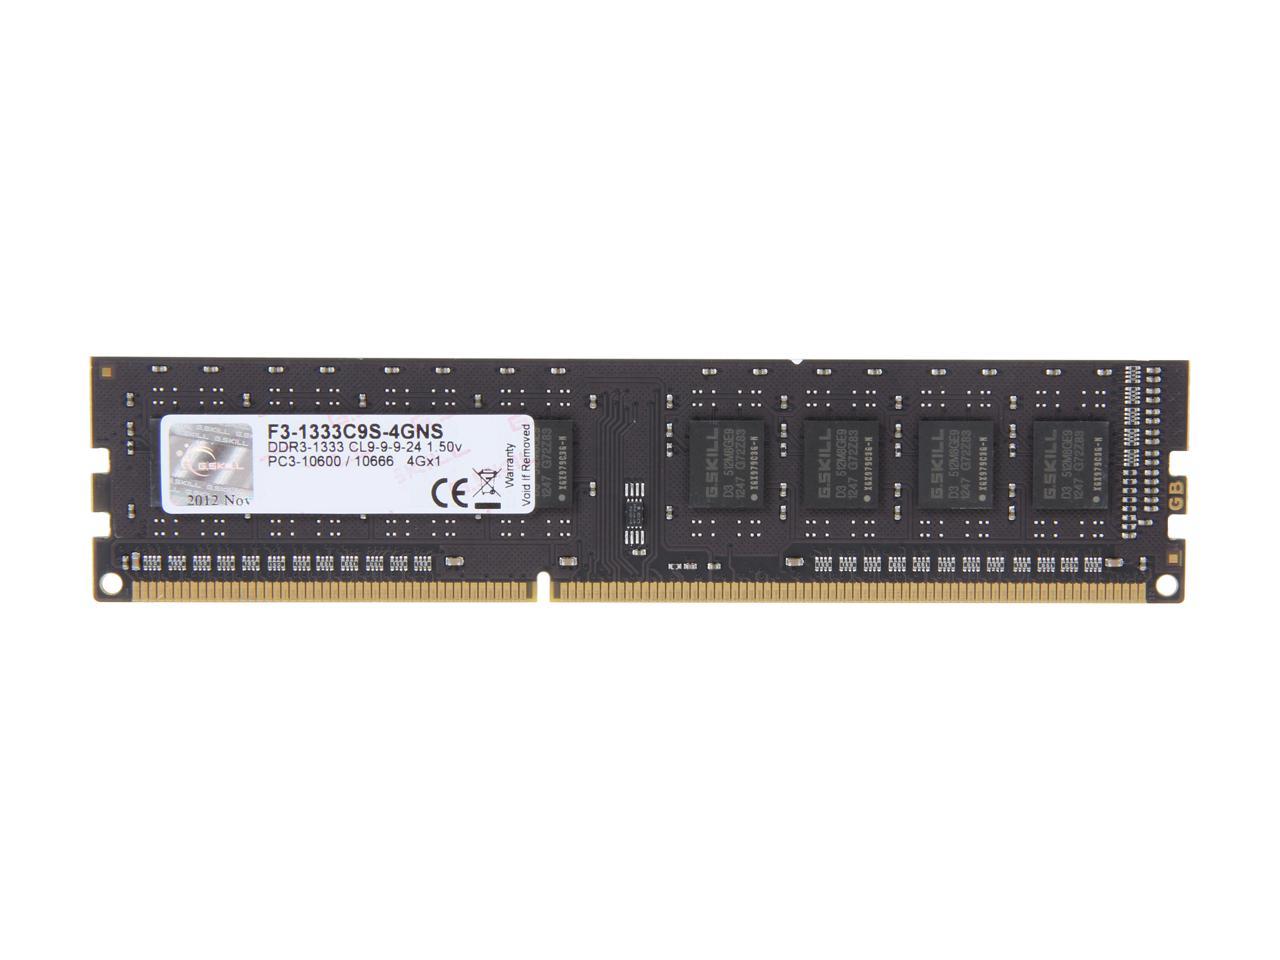 G.SKILL NS Series 4GB 240-Pin DDR3 SDRAM DDR3 1333 (PC3 10600) Desktop Memory Model F3-1333C9S-4GNS